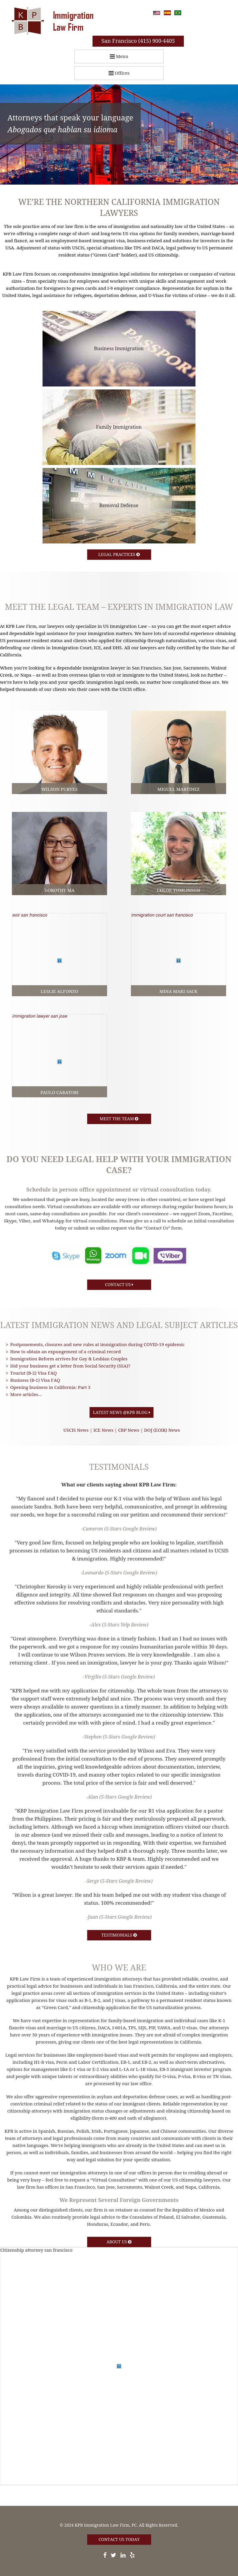 KPB Immigration Law Firm - San Francisco CA Lawyers